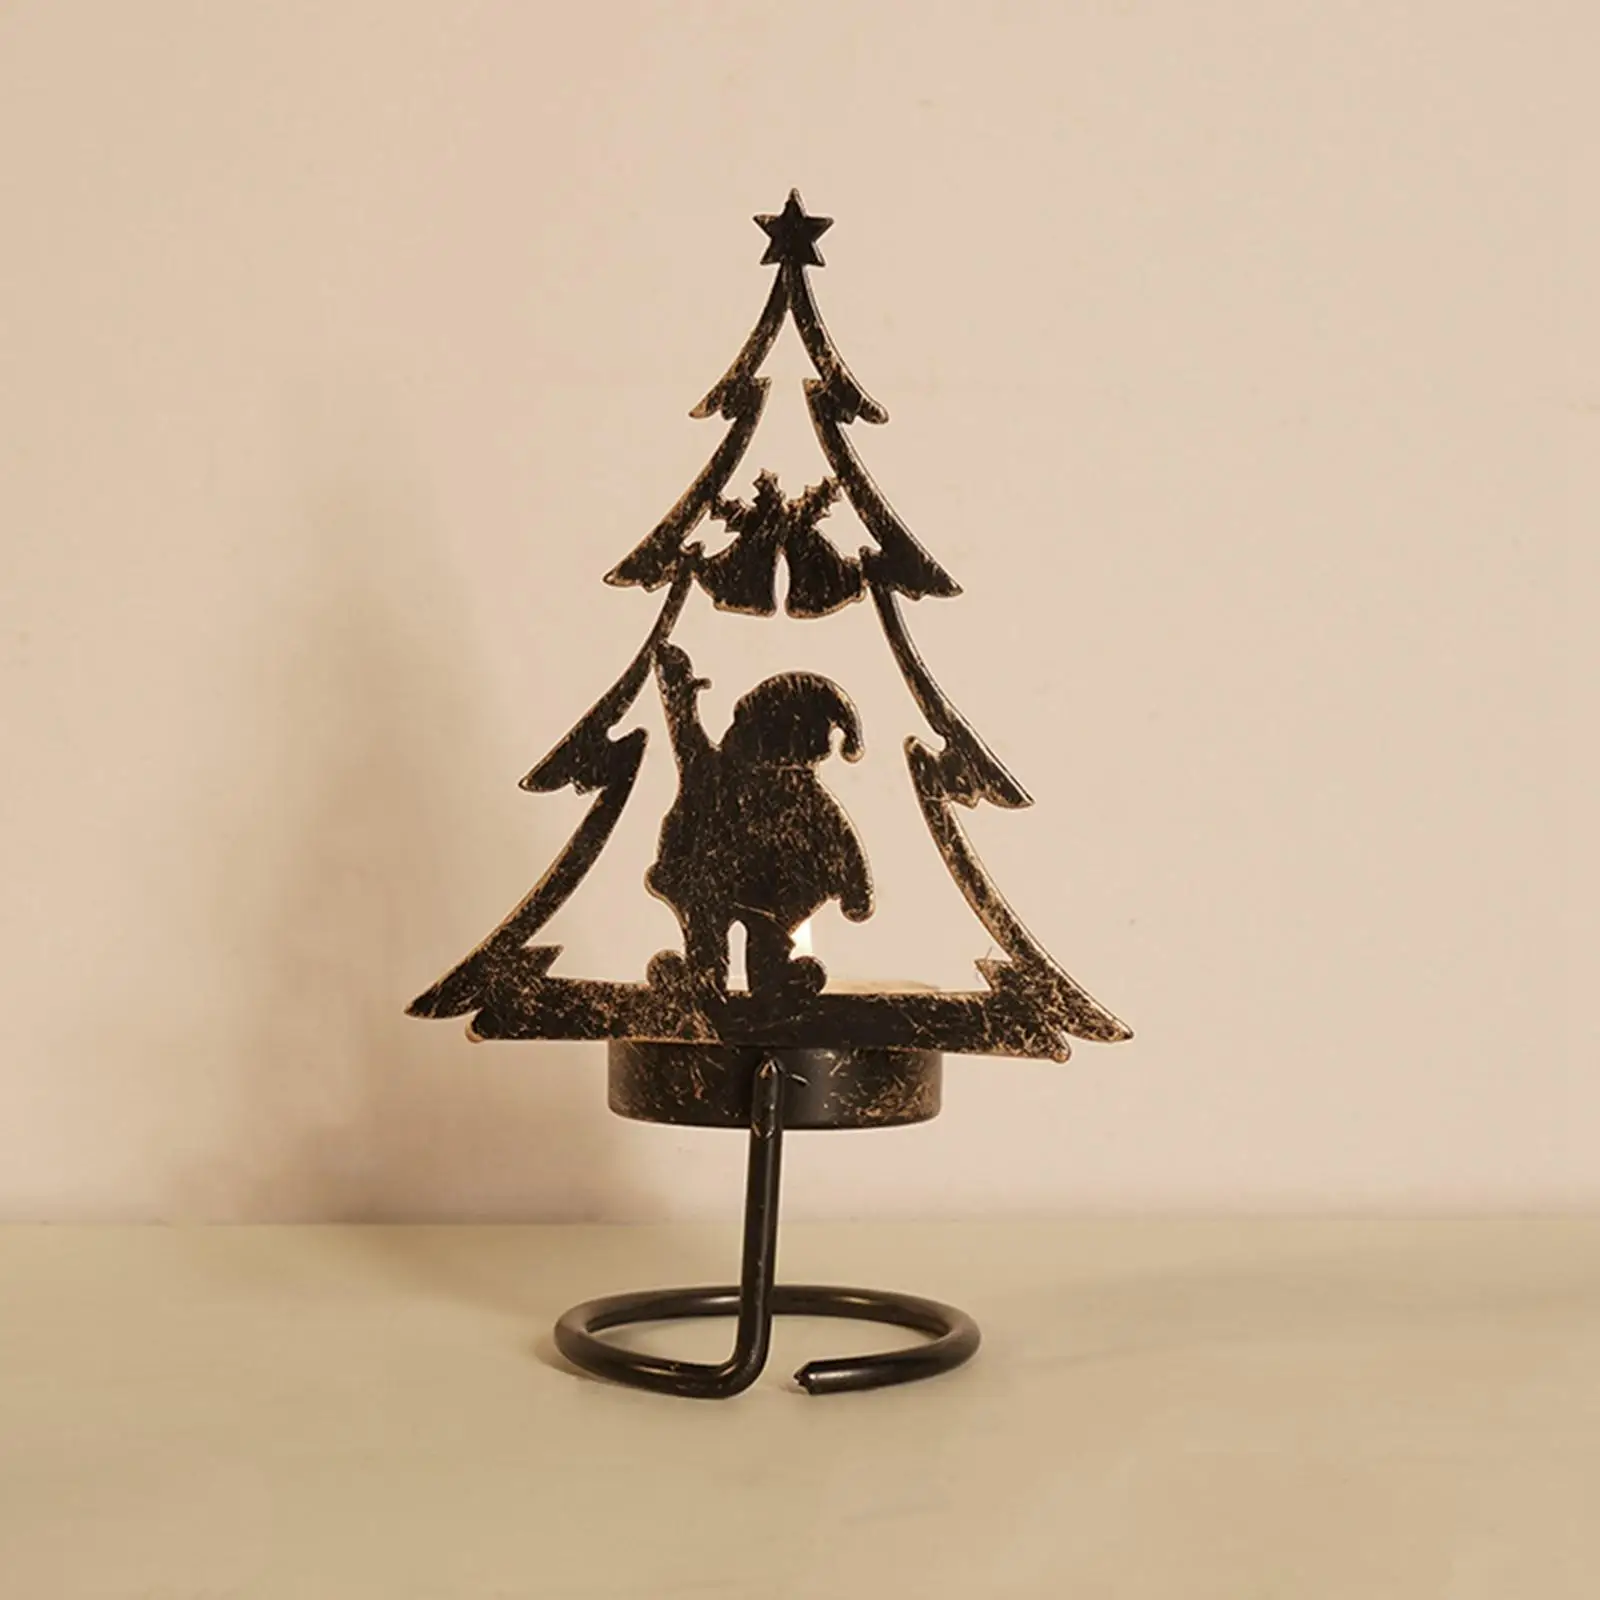 Candle Lantern Lights Decorative Handmade Iron Christmas Tree Candle Holder for